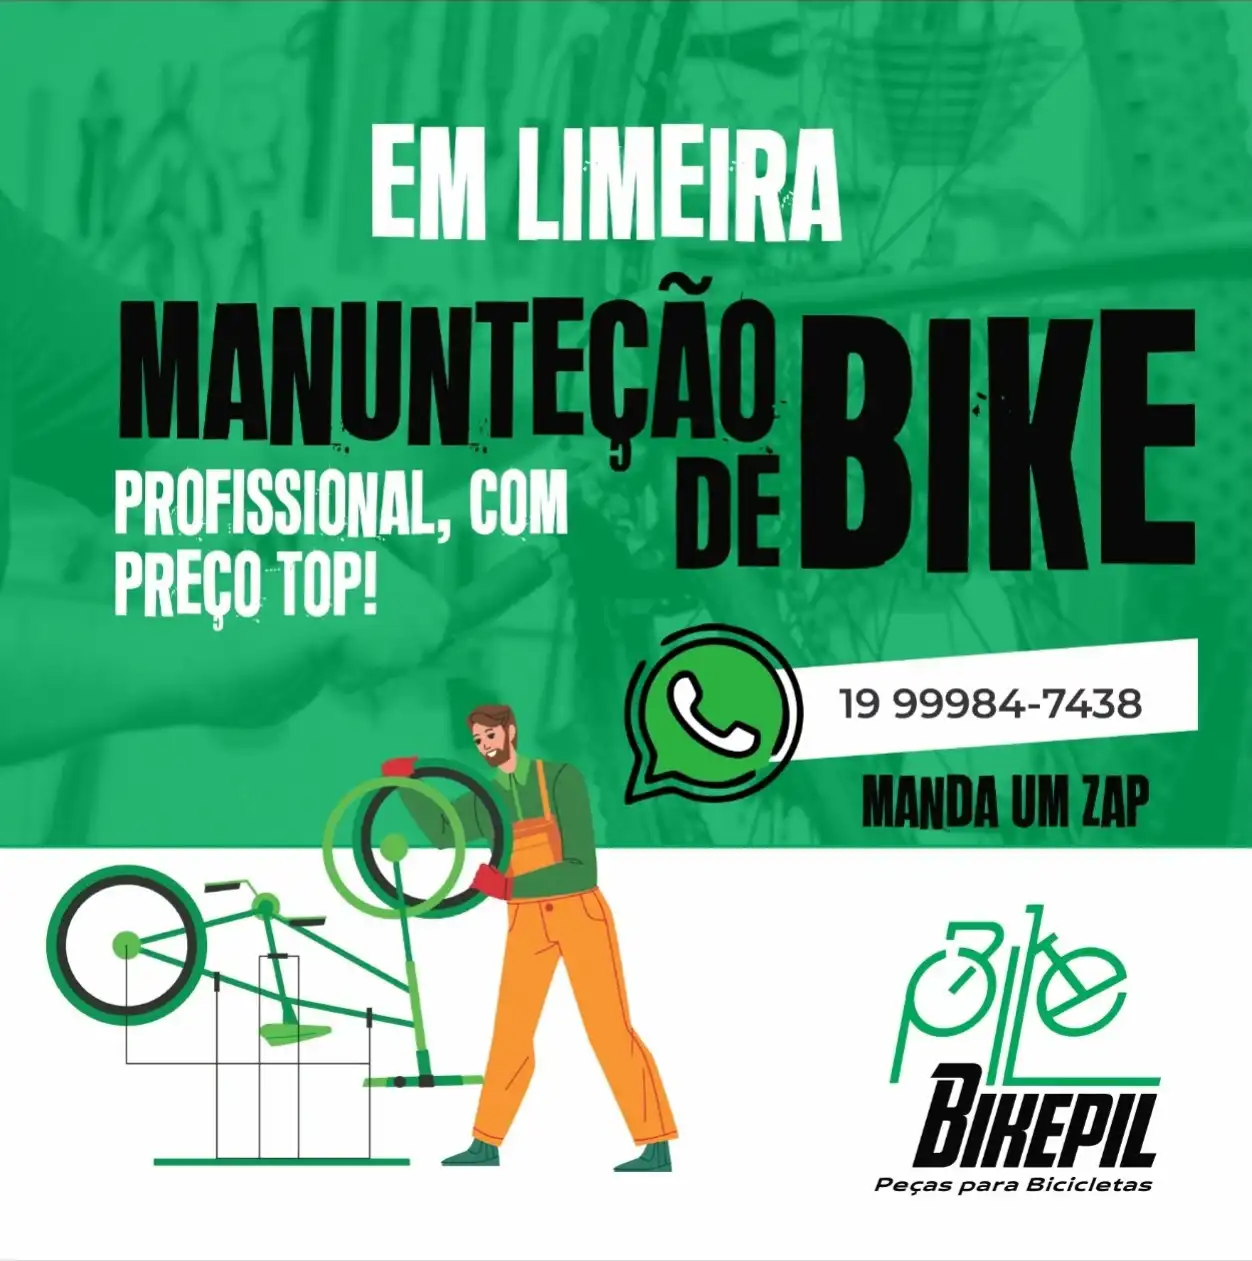 
Propaganda Post Manutenção de Bicicleta



